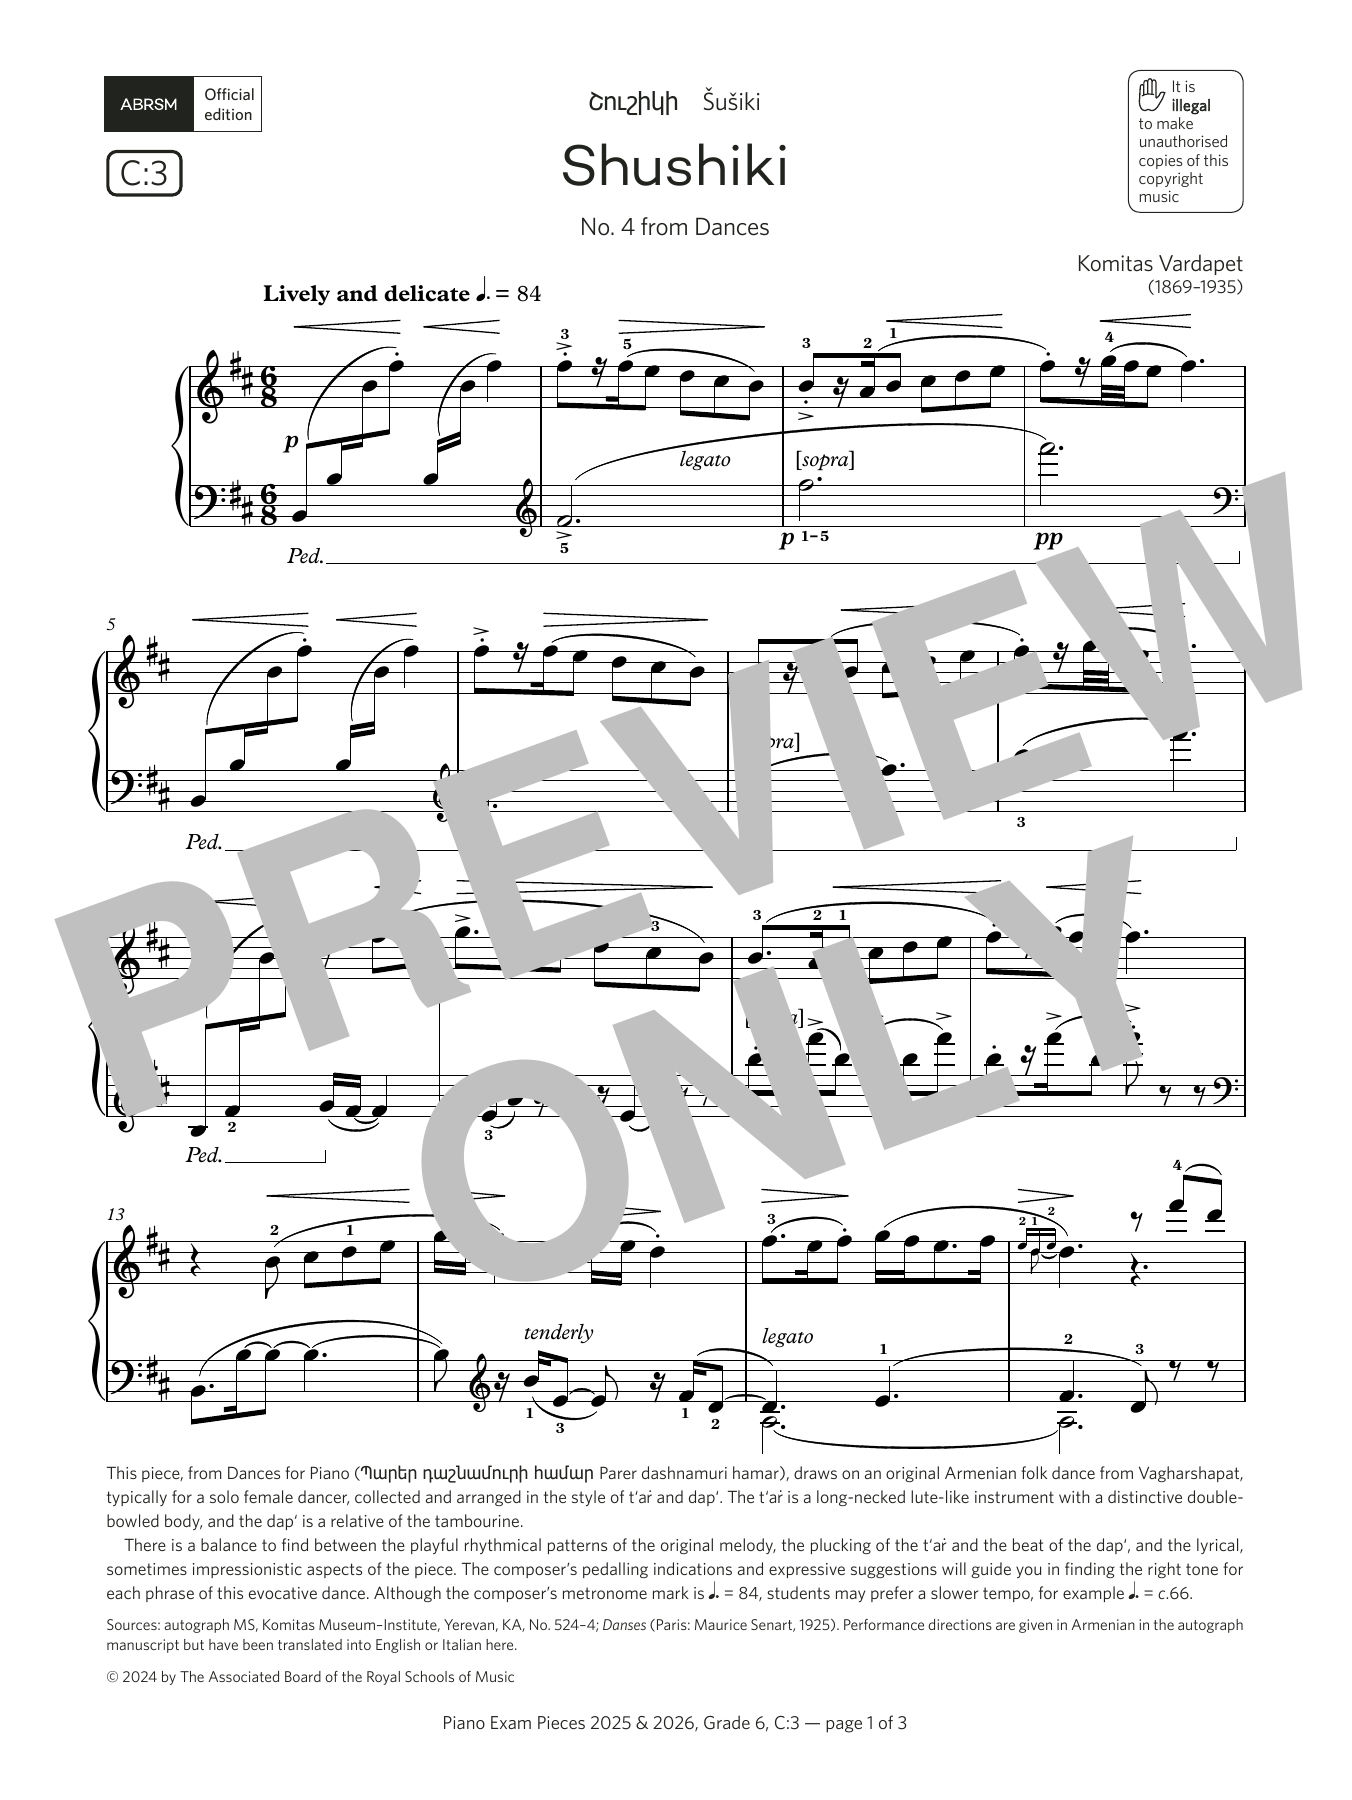 Komitas Vardapet Shushiki (Grade 6, list C3, from the ABRSM Piano Syllabus 2025 & 2026) sheet music notes and chords arranged for Piano Solo